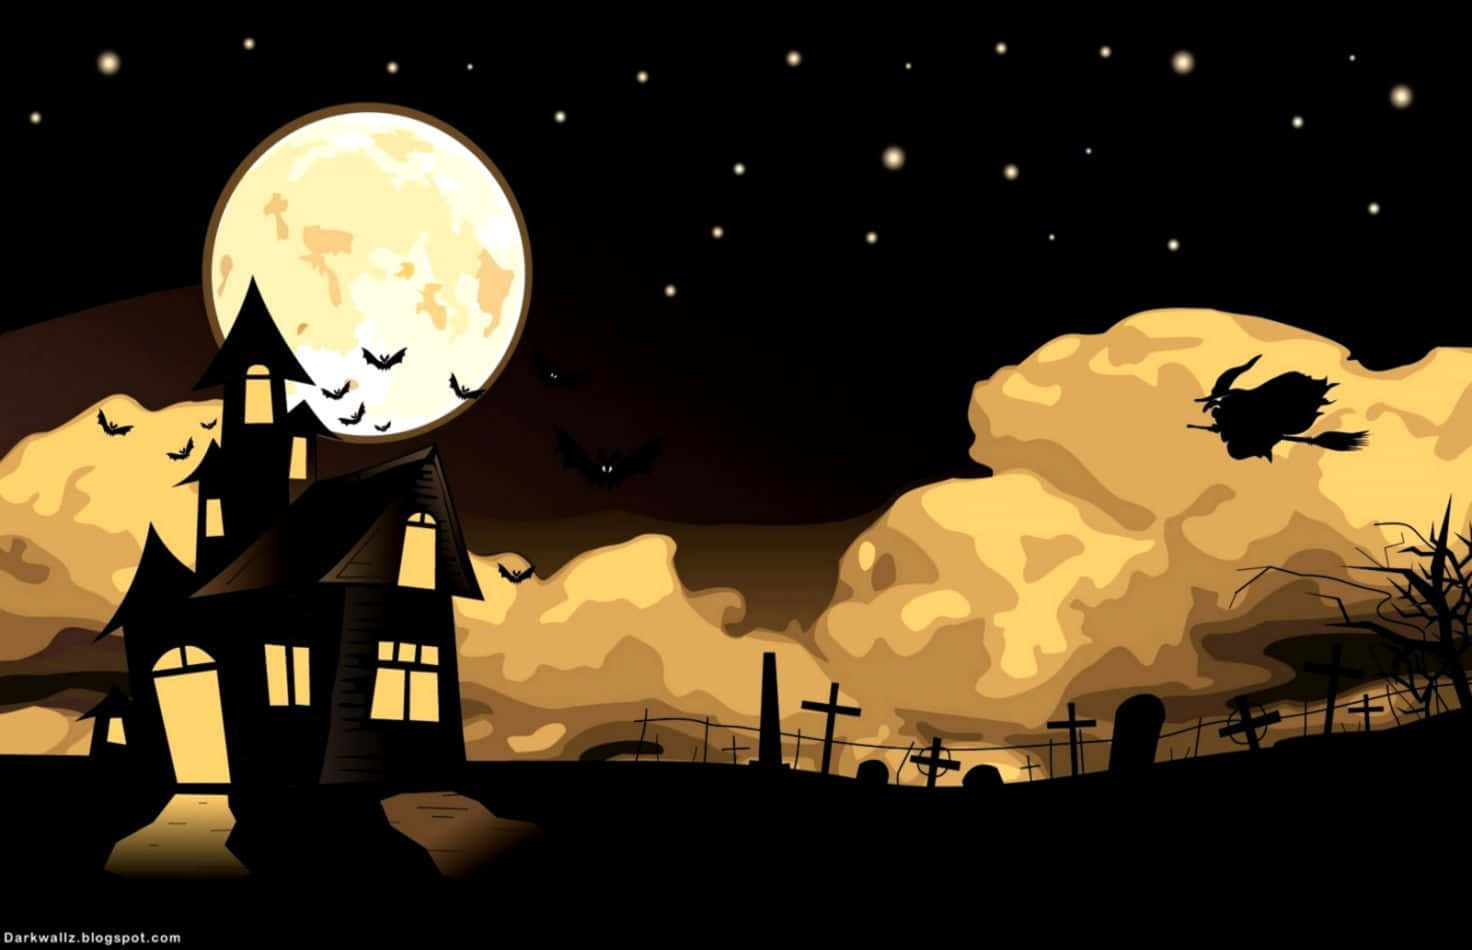 Spread Some Spooky Joy This Halloween! Wallpaper